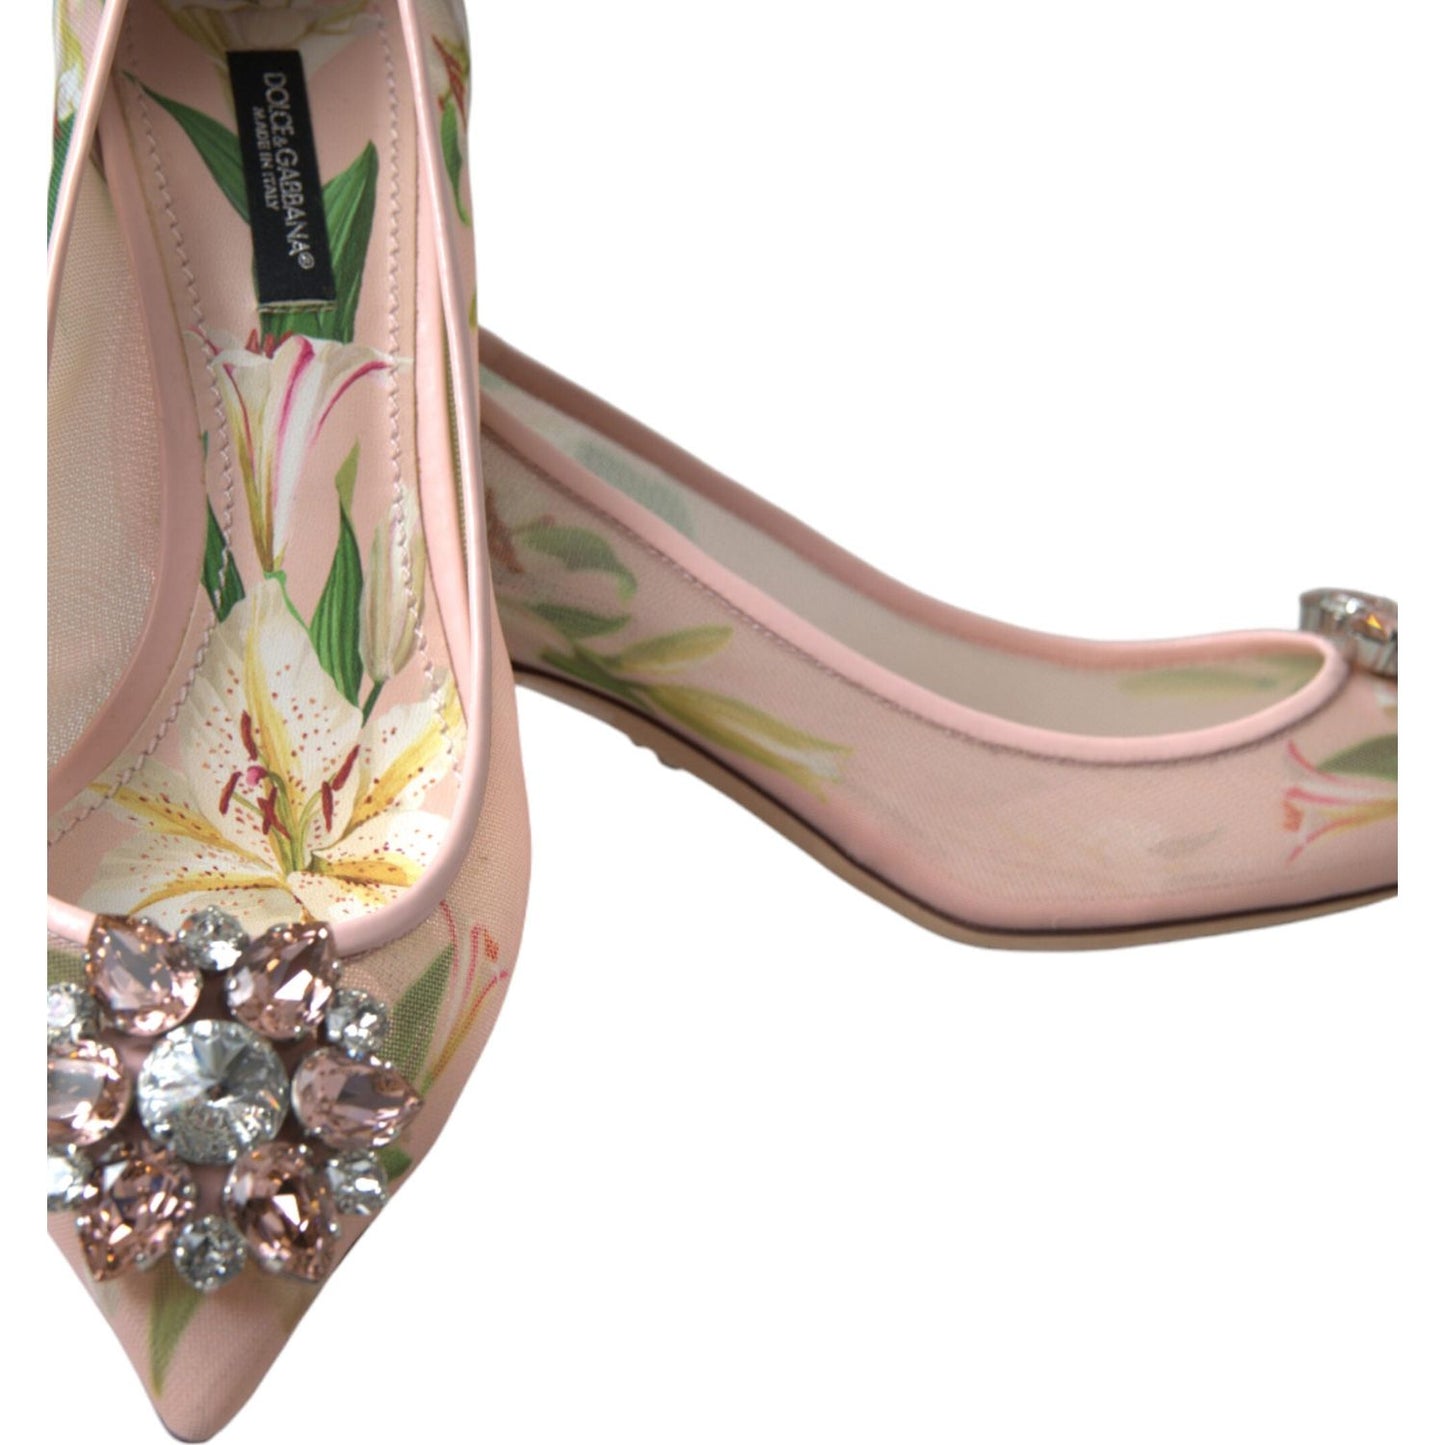 Dolce & Gabbana Elegant Pink Floral Crystal Pumps pink-floral-crystal-heels-pumps-shoes 465A9569-bg-scaled-33705520-5fa.jpg